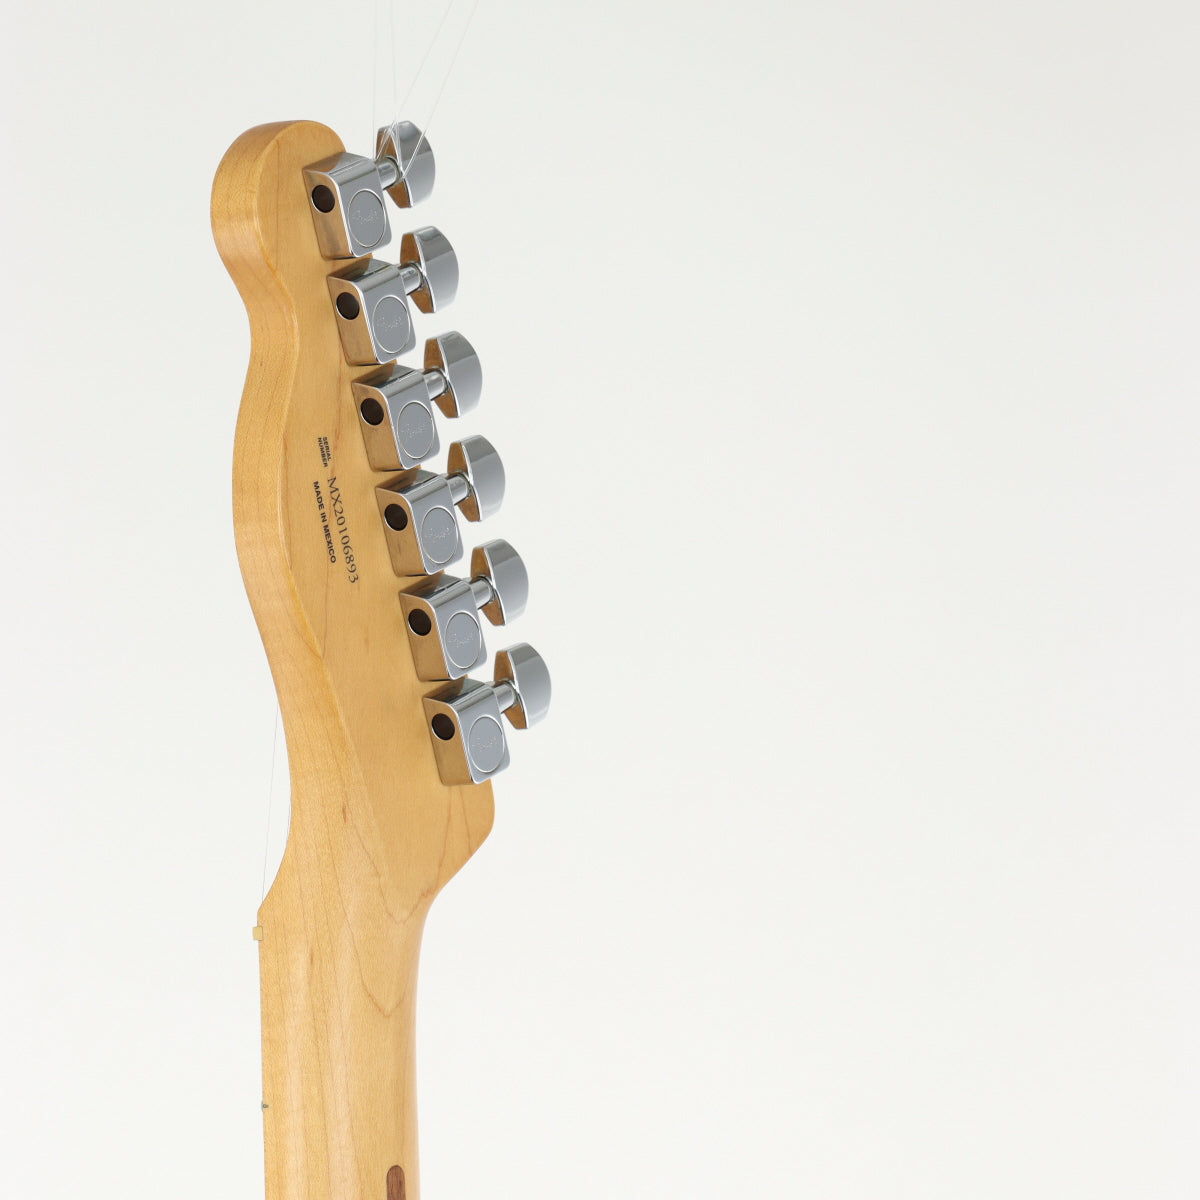 [SN MX20106893] USED Fender / Player Telecaster Black / Maple Fingerboard [12]